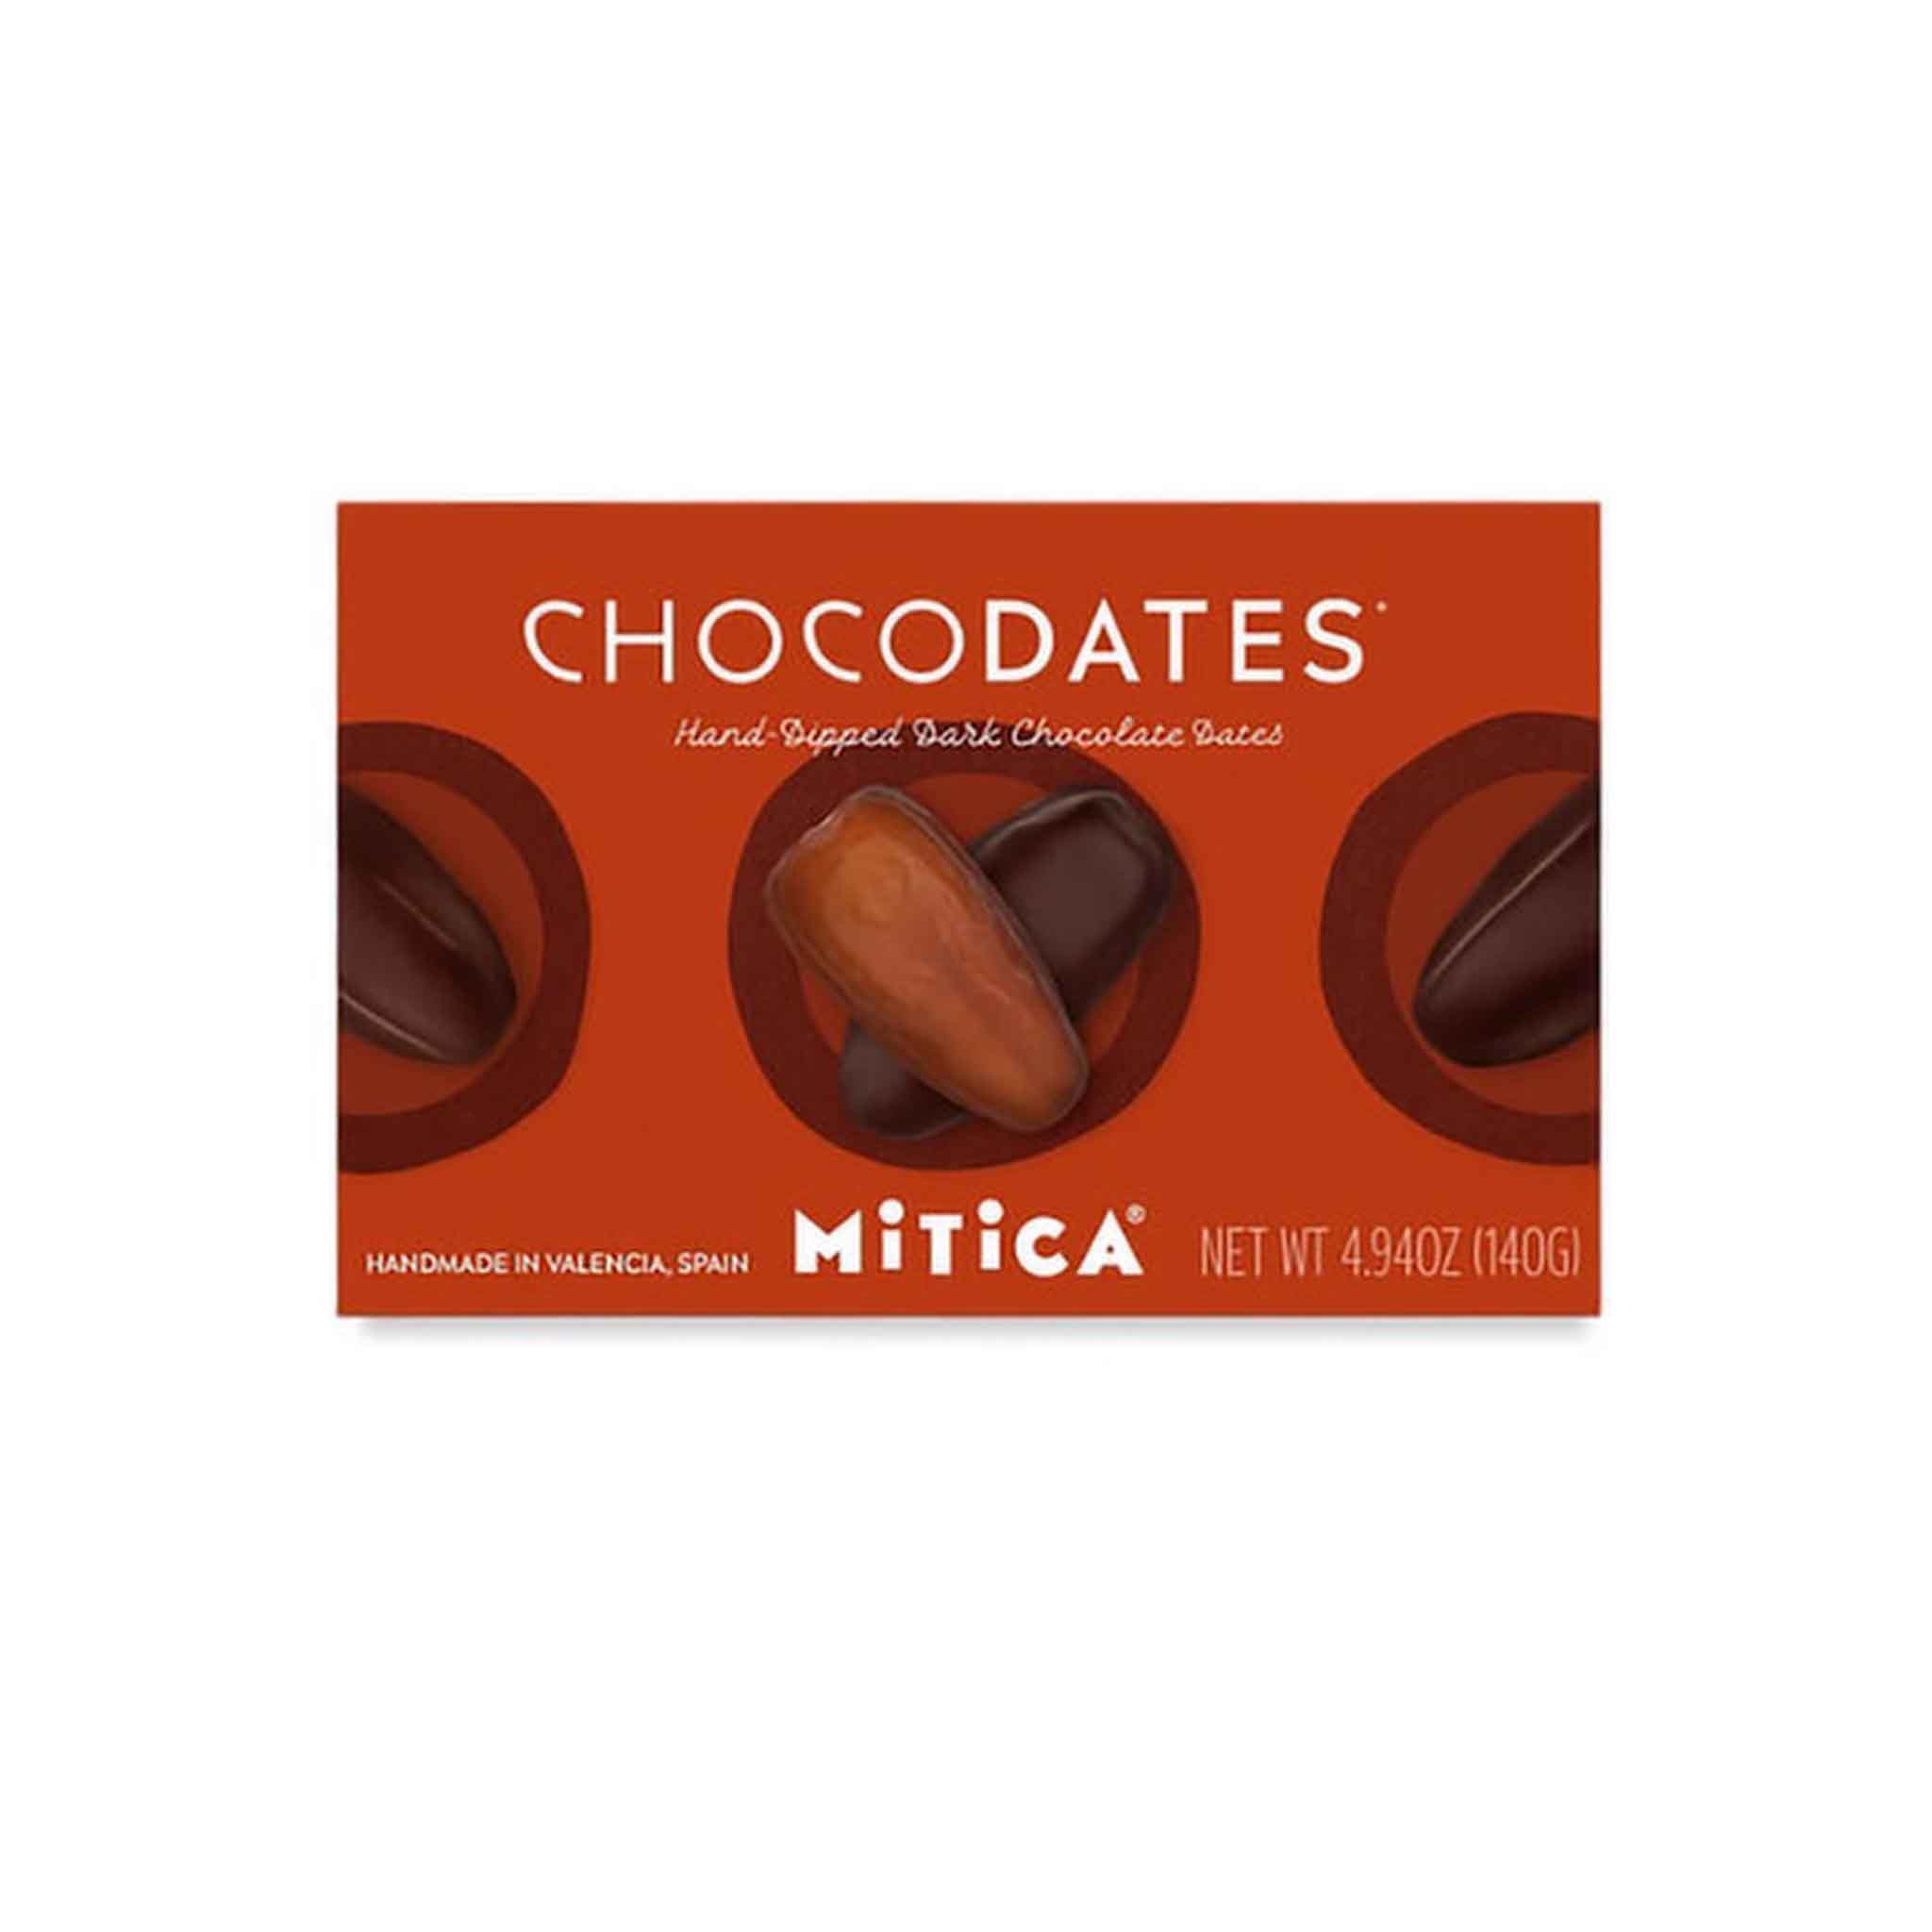 MITICA CHOCOLATE COVERED DATES 4.94oz